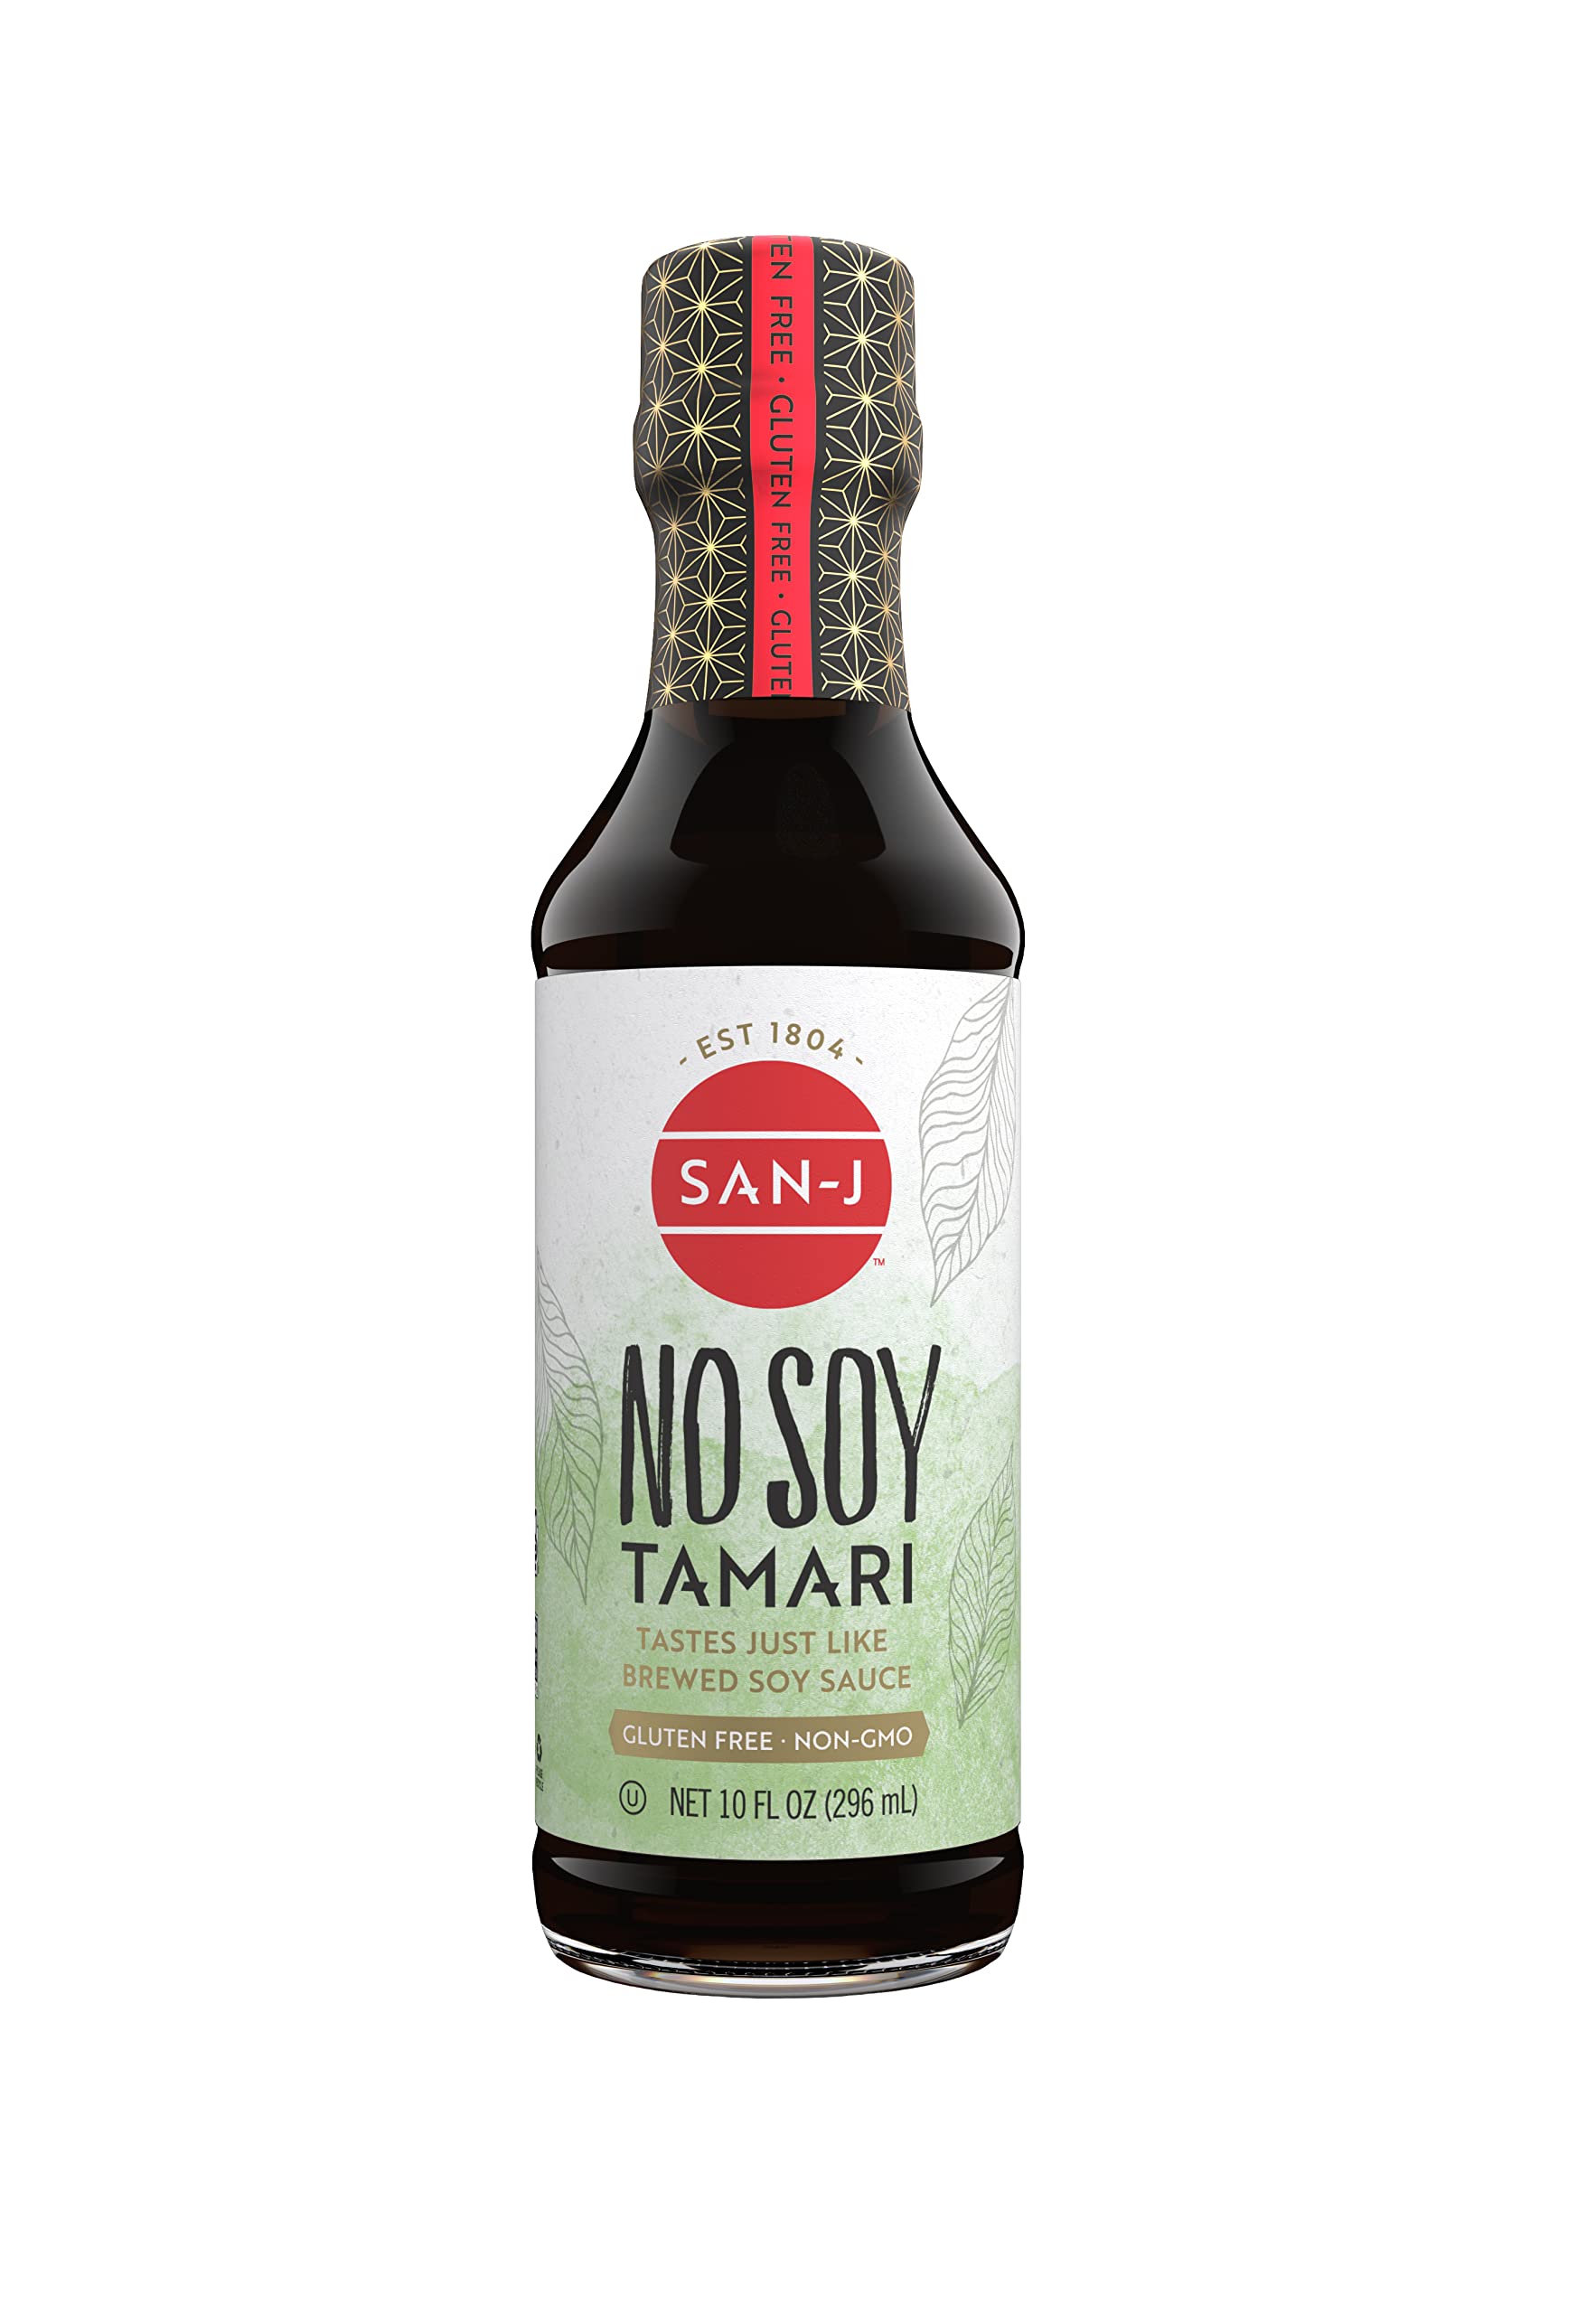 San-J No Soy Tamari - Soy Sauce Alternative, Free of Soy & Other Major Allergens. Umami-Rich Flavor, Gluten Free Soy Sauce Alternative, Low FODMAP, Non-GMO, Taste Like Brewed Soy Sauce - 10 Fl Oz